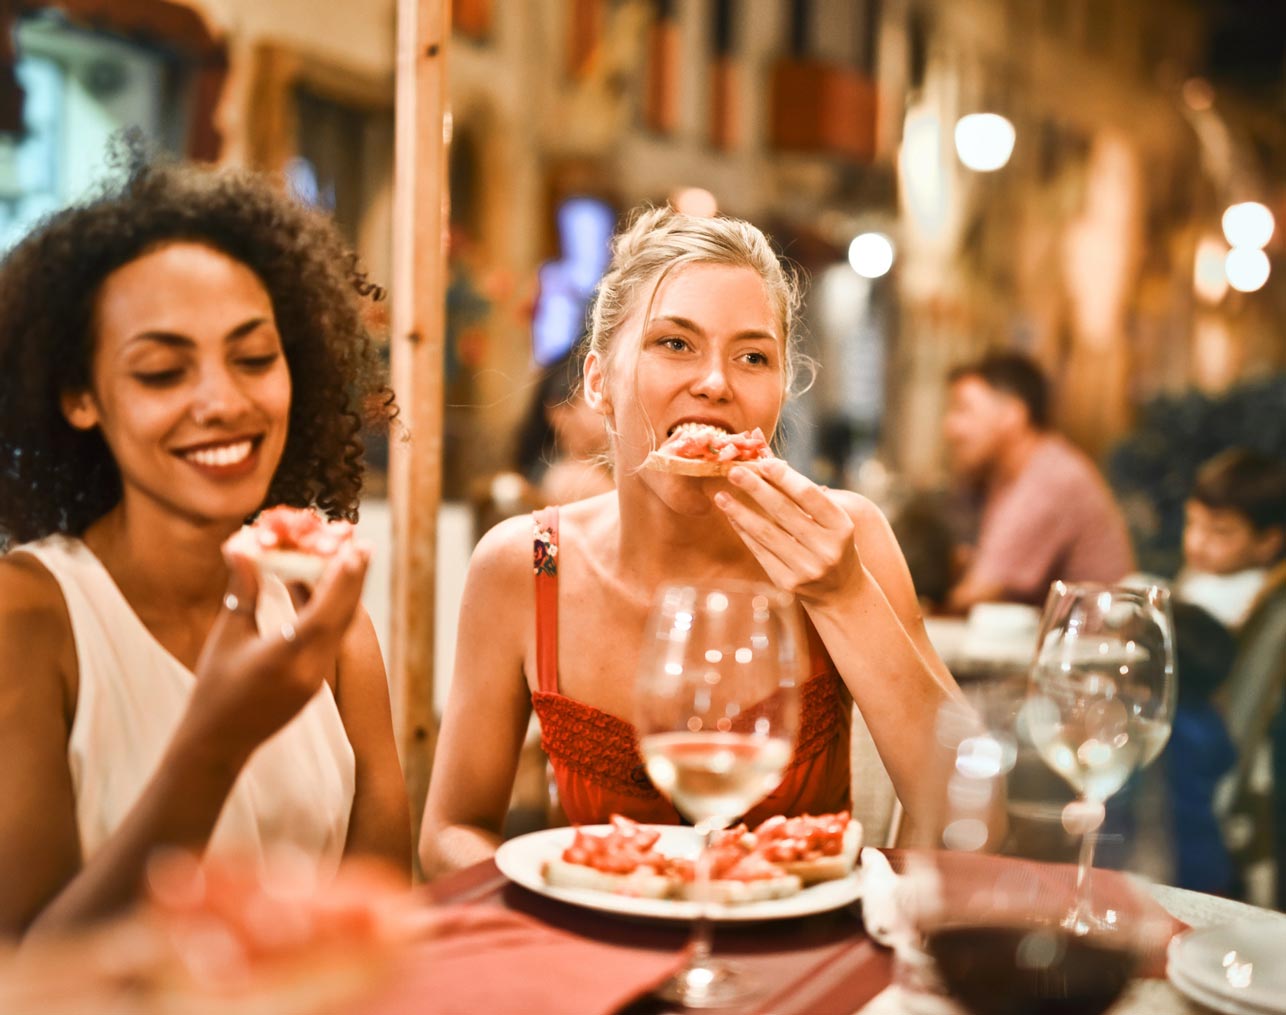 Women eating in a restaurant